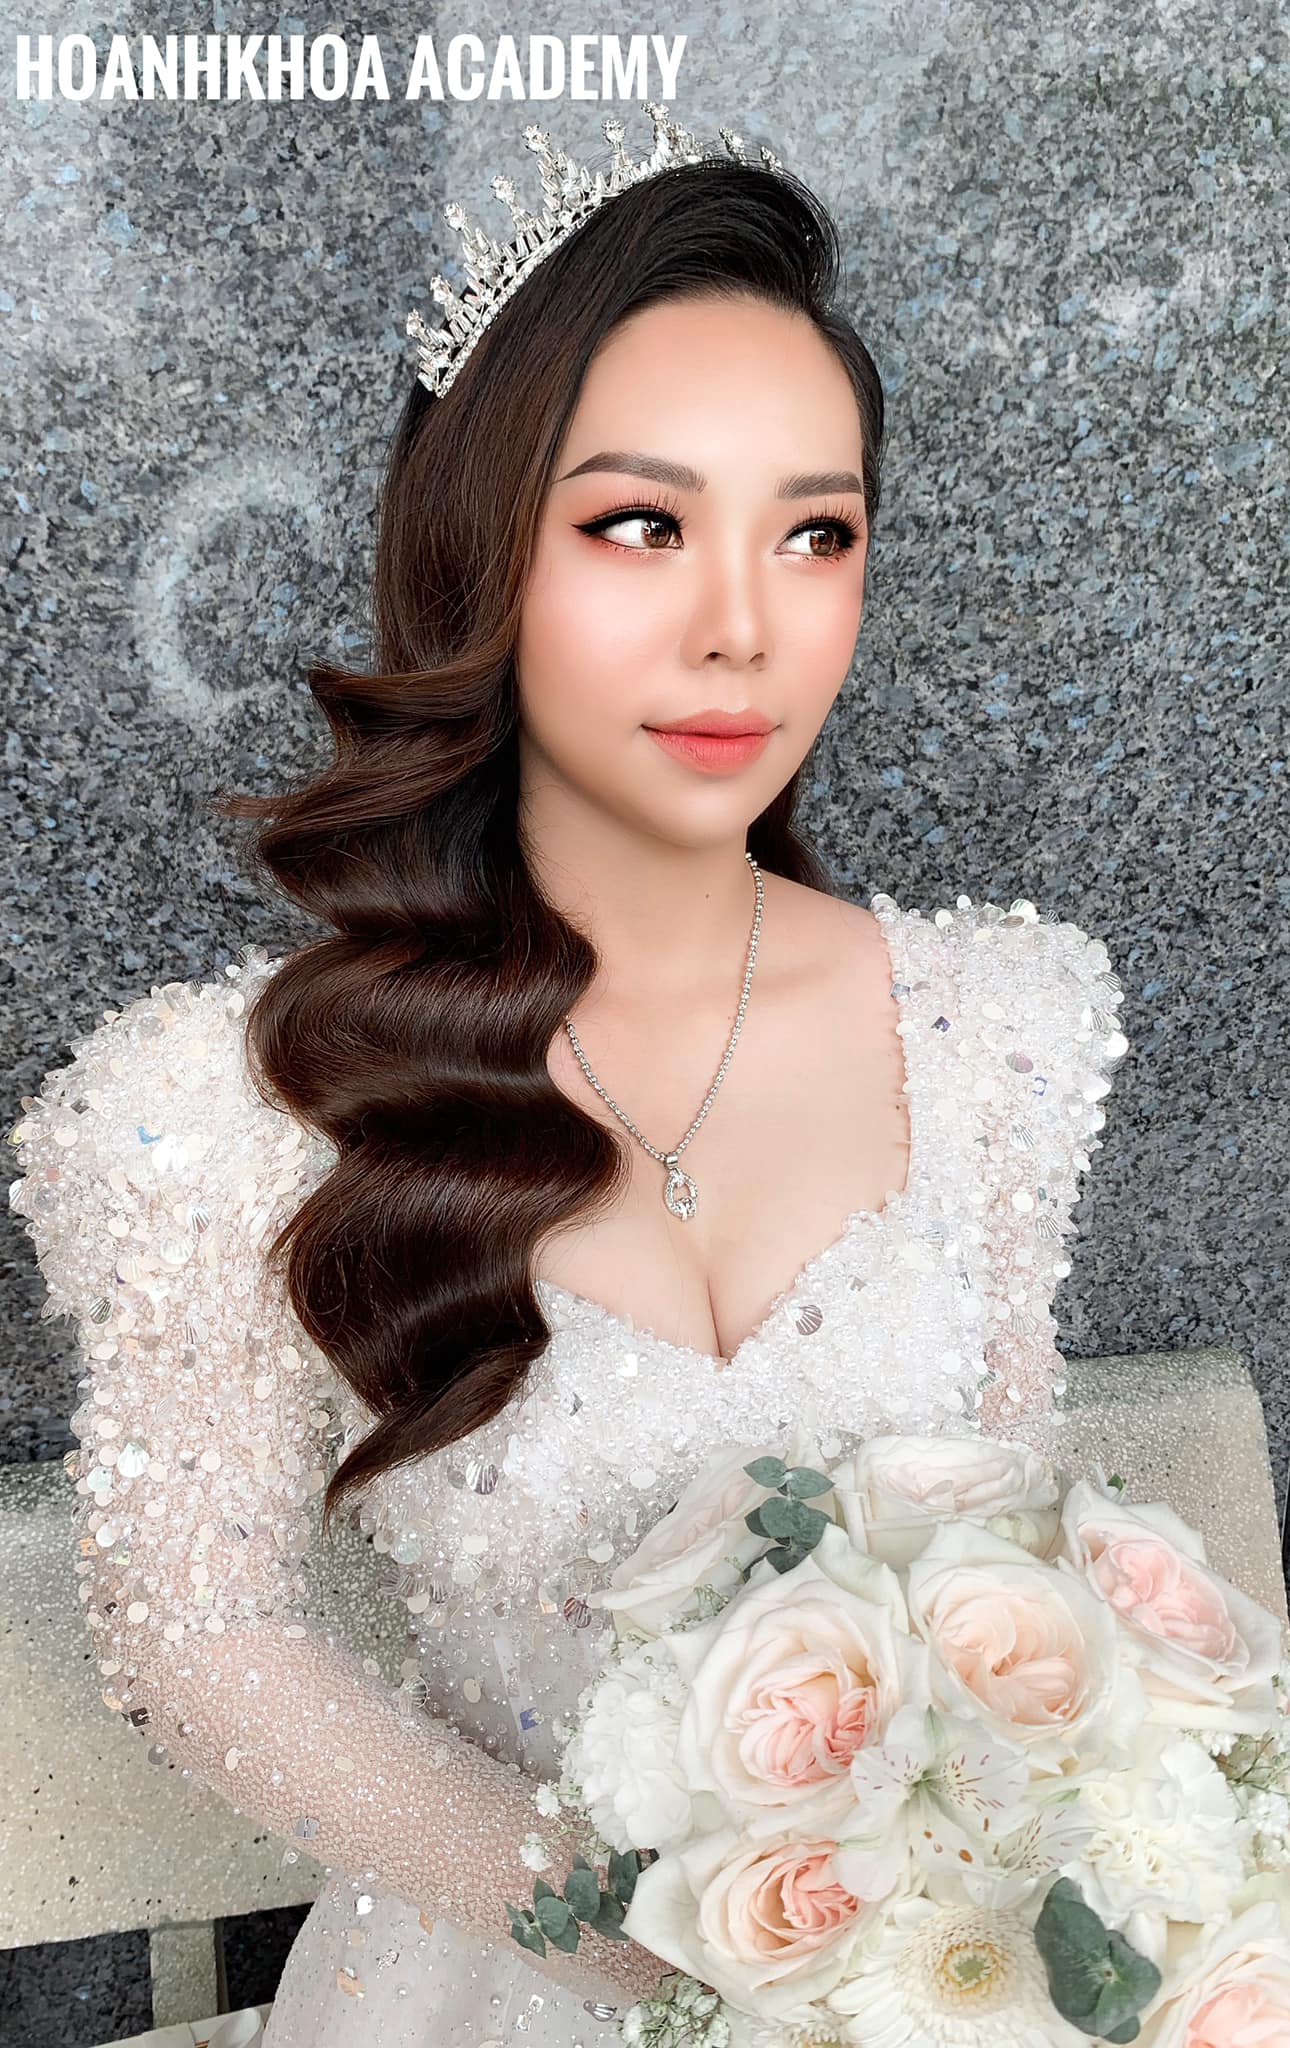 Ngô Thanh Trung make up (Hồ Anh Khoa Academy Bridal) ảnh 1